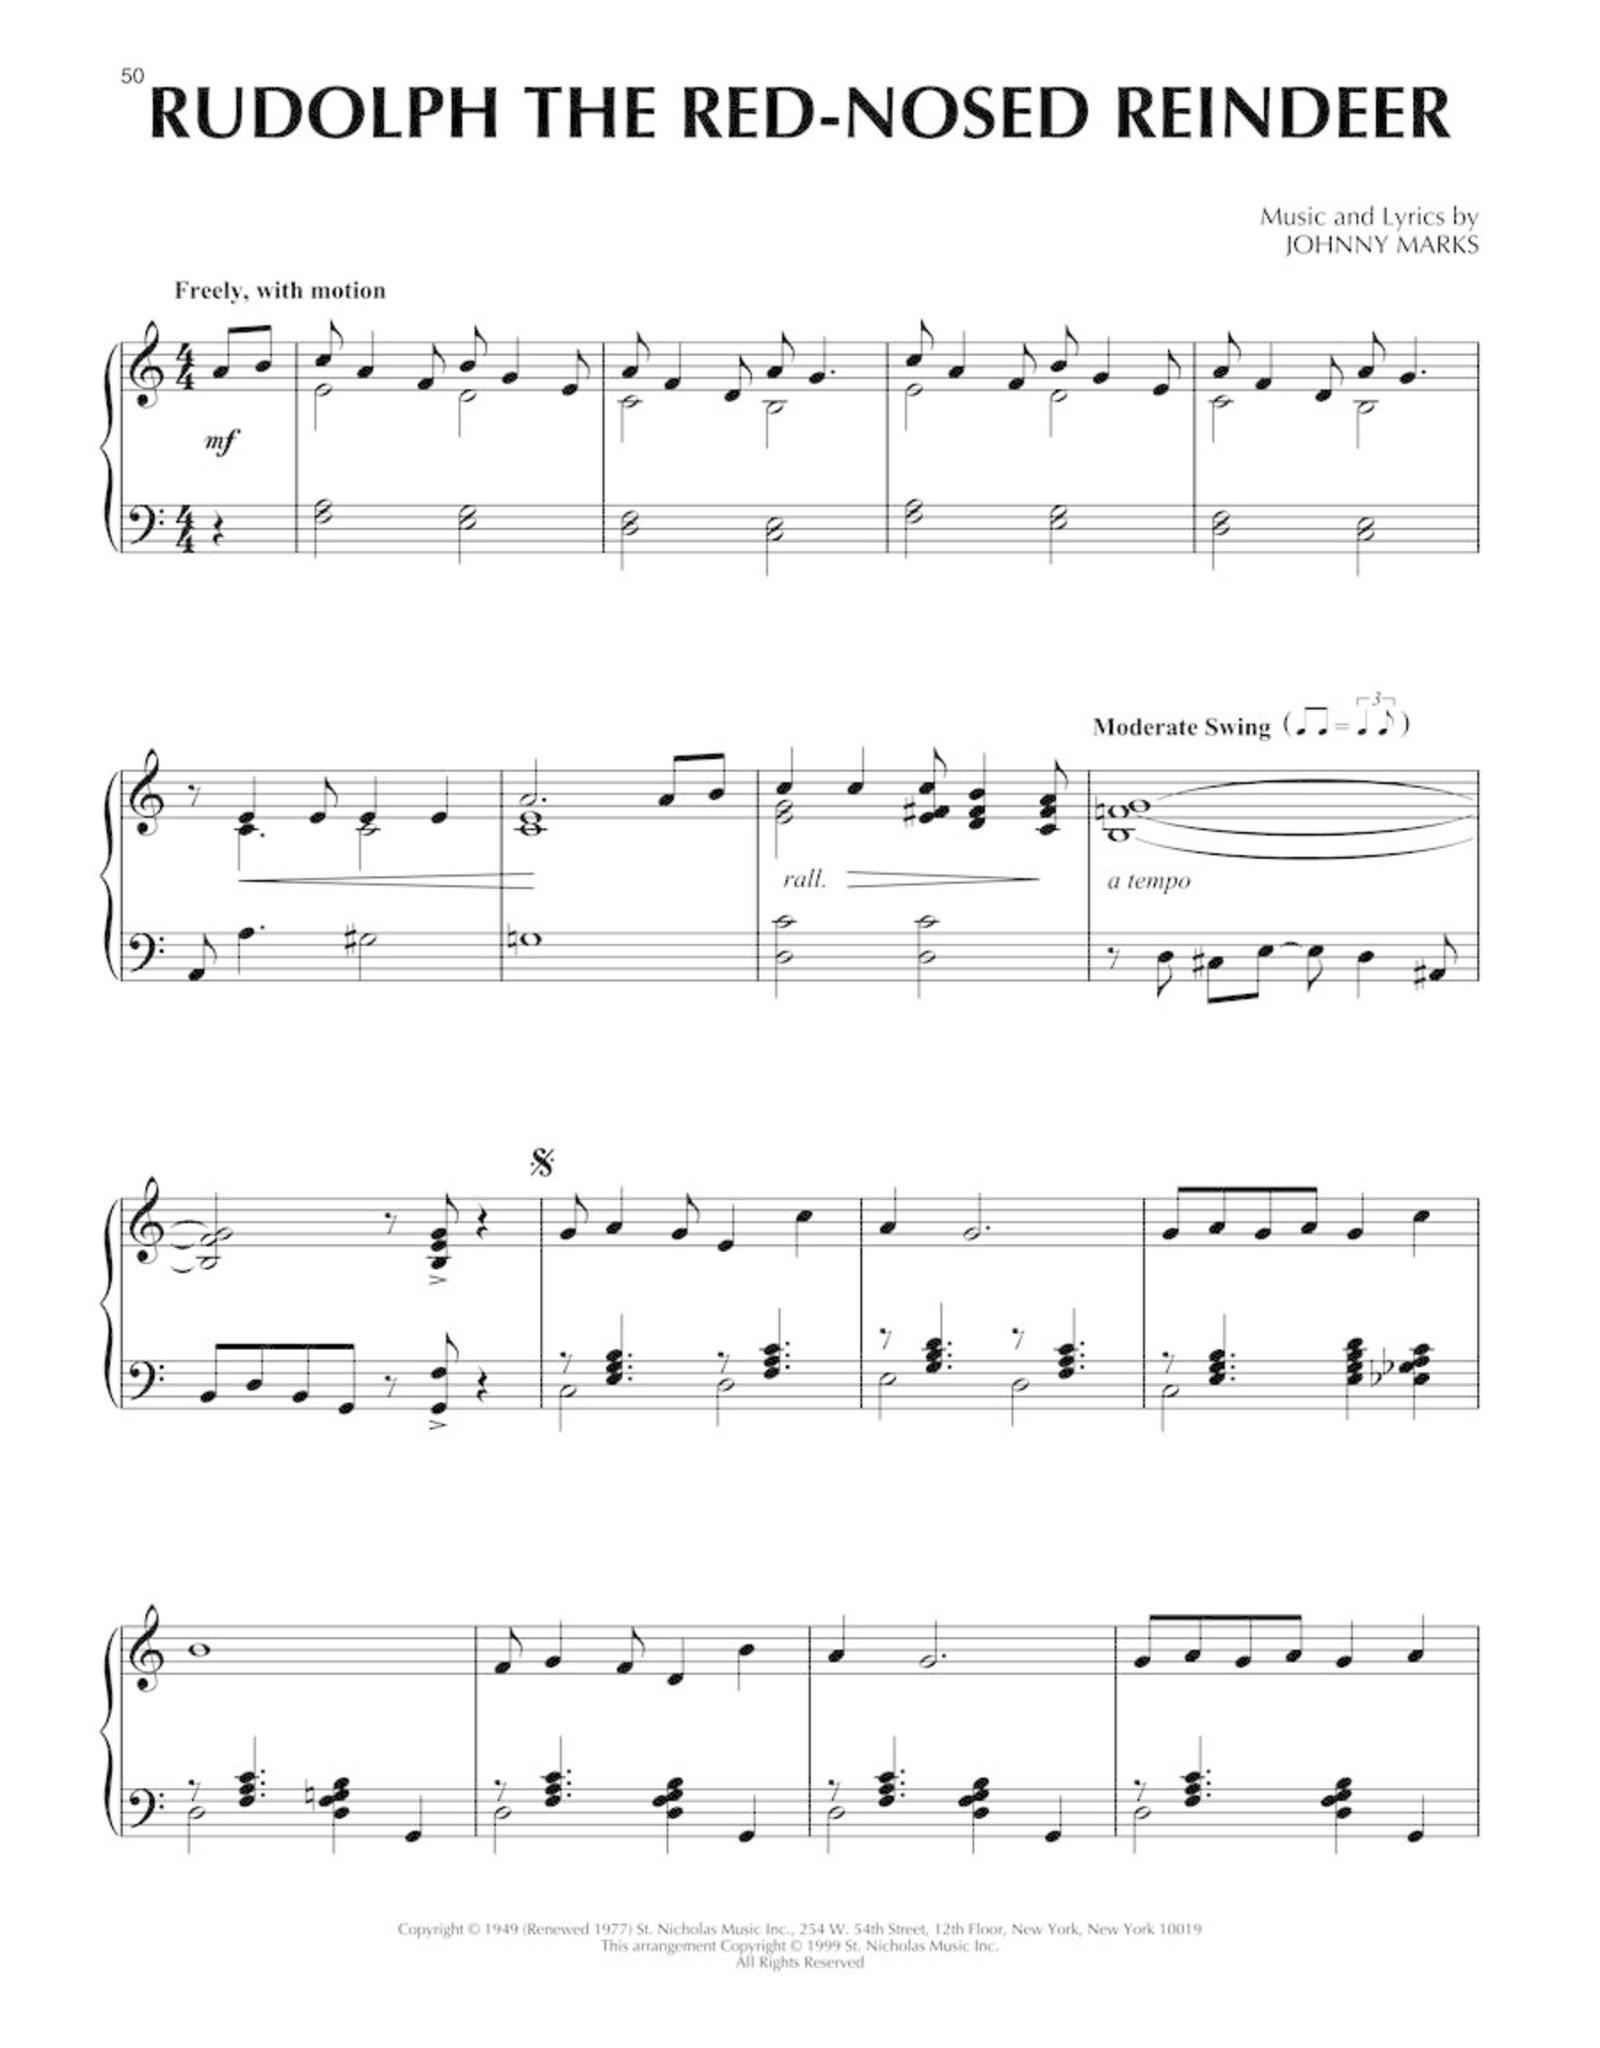 Hal Leonard Christmas at the Piano - Piano Solos